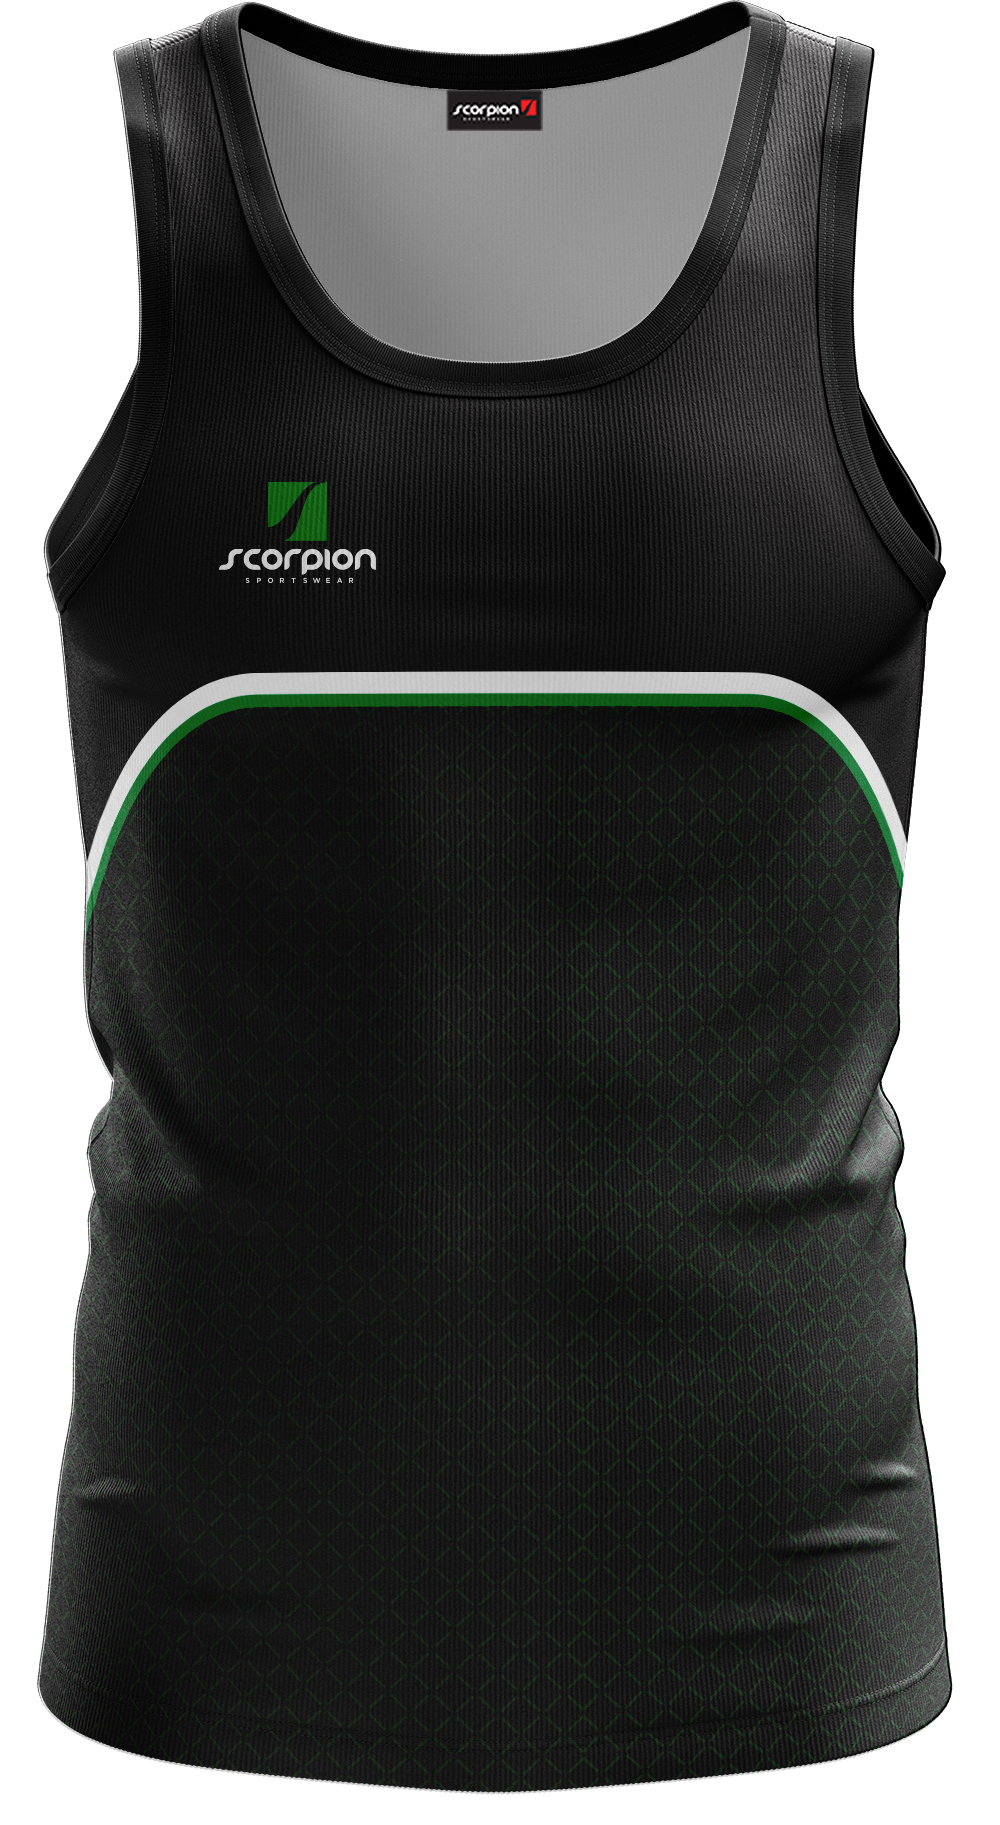 Scorpion Vests Pattern 3 - Black/Green/White